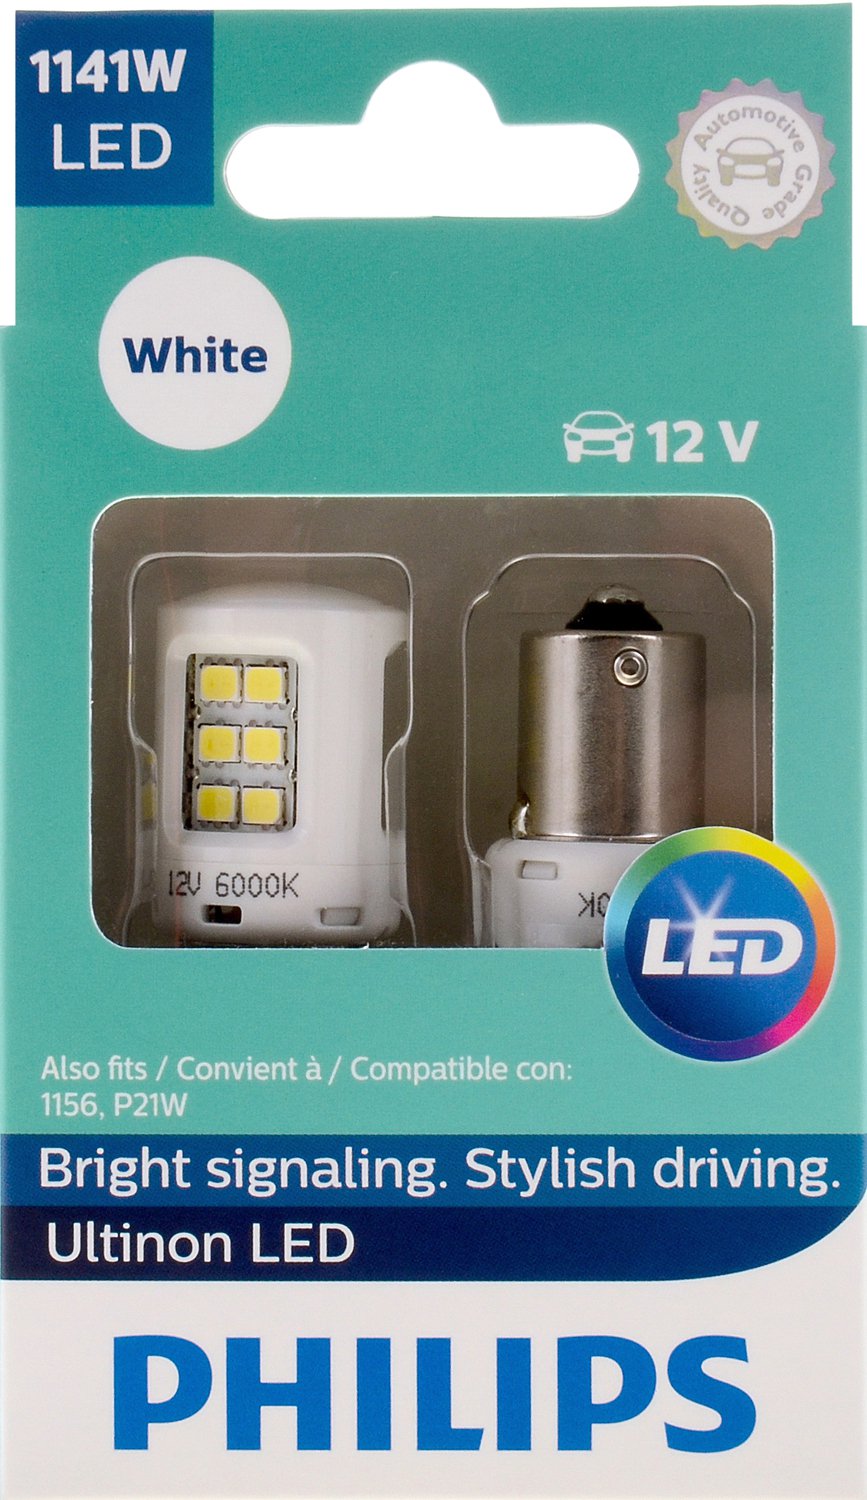 Philips White Interior Car Light Damaged Box